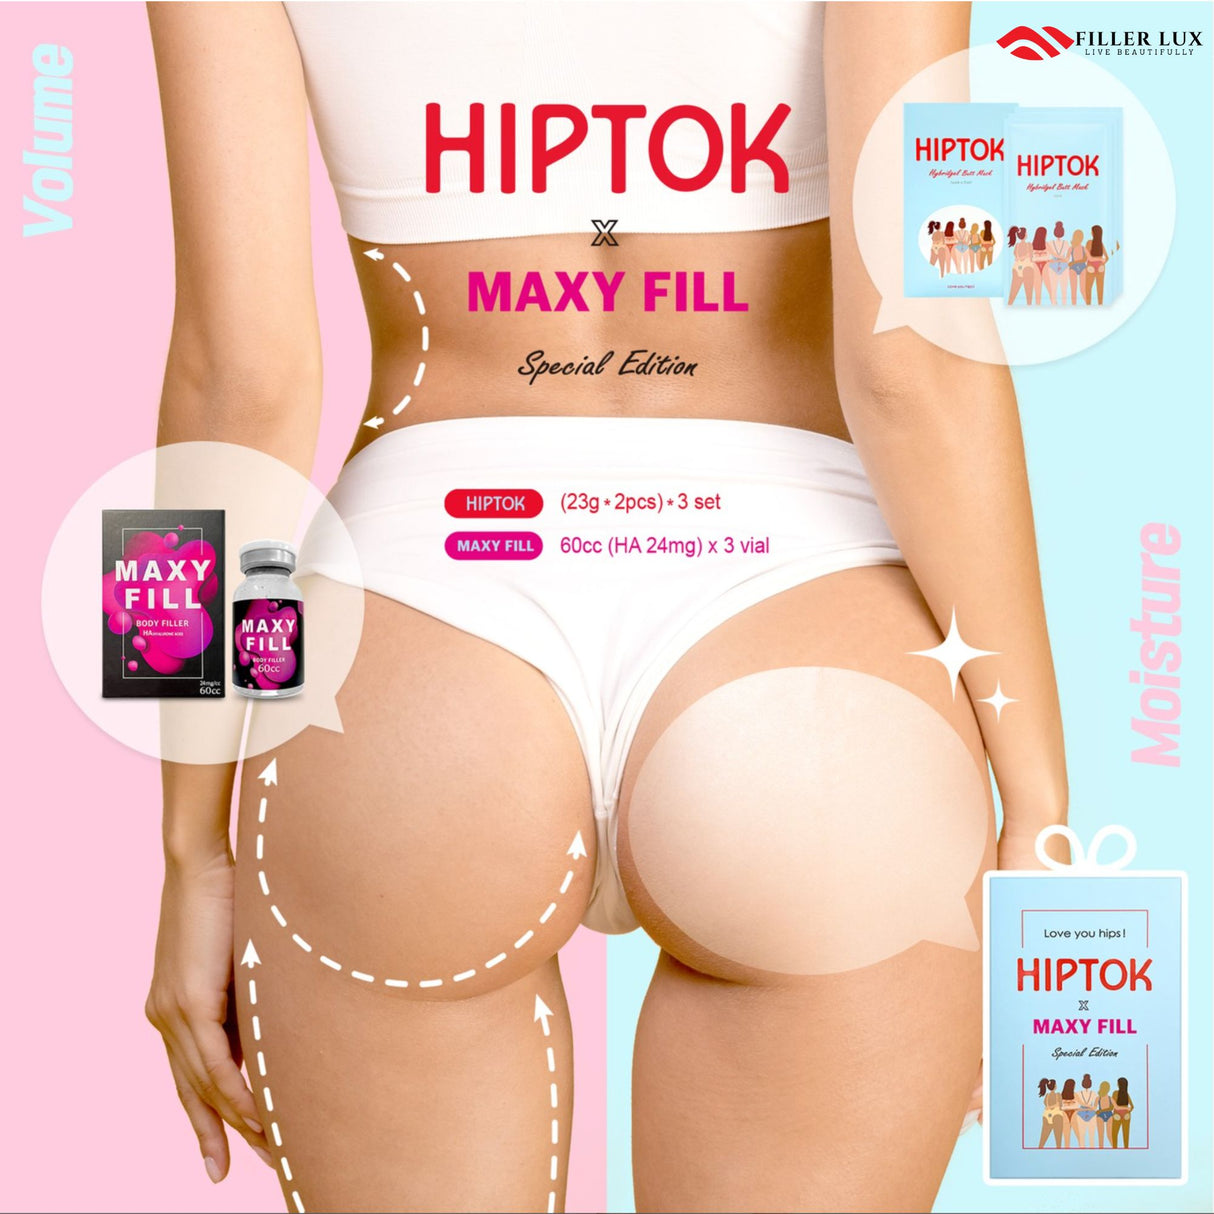 Maxy Fill Body - Filler Lux™ - DERMAL FILLERS - Quiver Medic